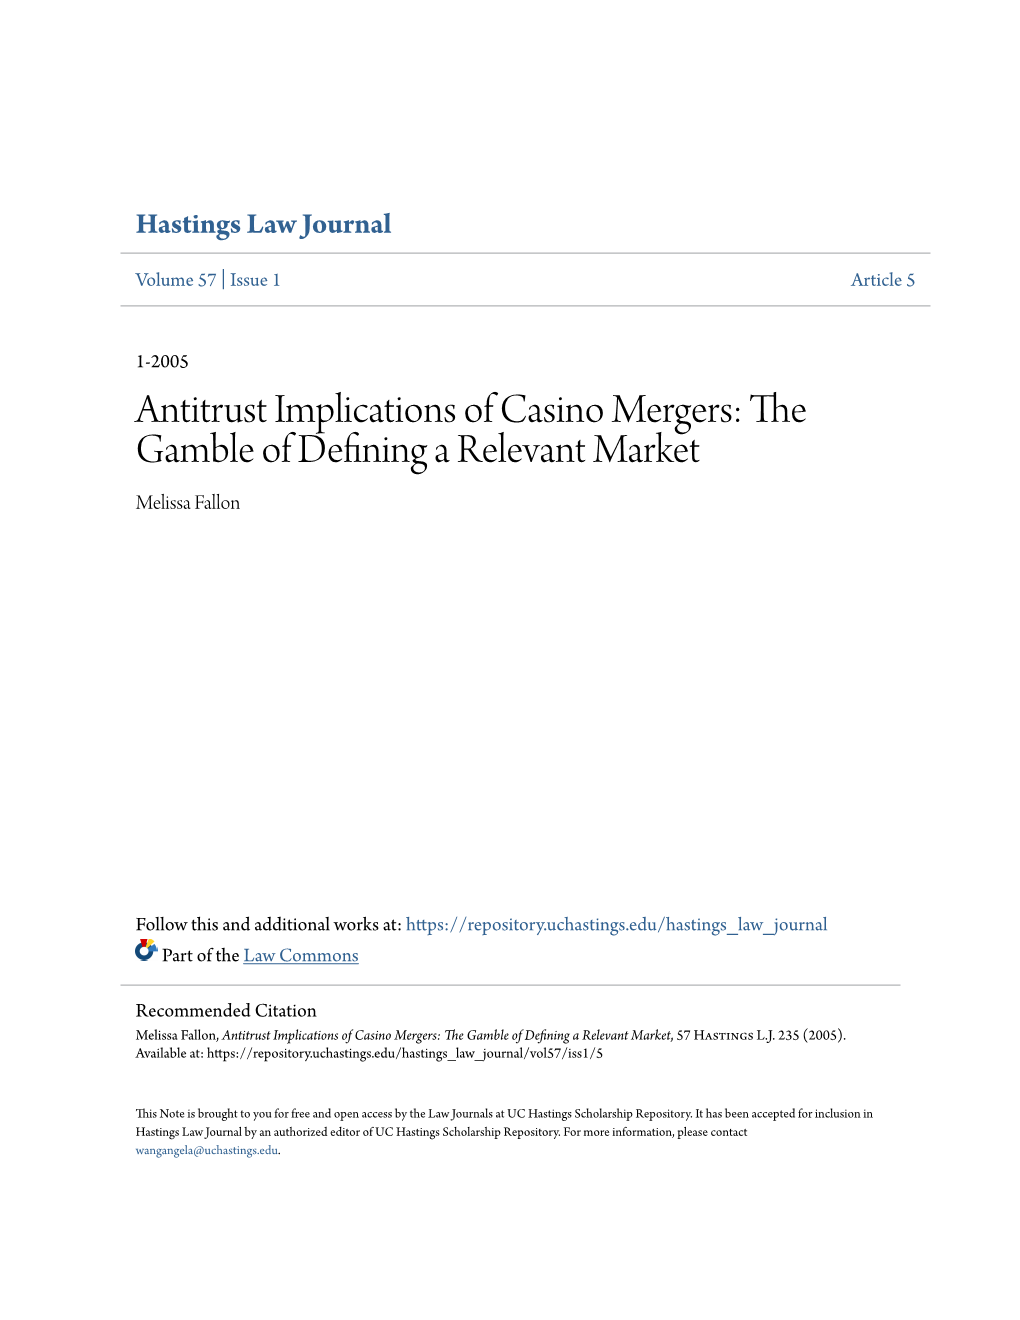 Antitrust Implications of Casino Mergers: the Gamble of Defining a Relevant Market Melissa Fallon